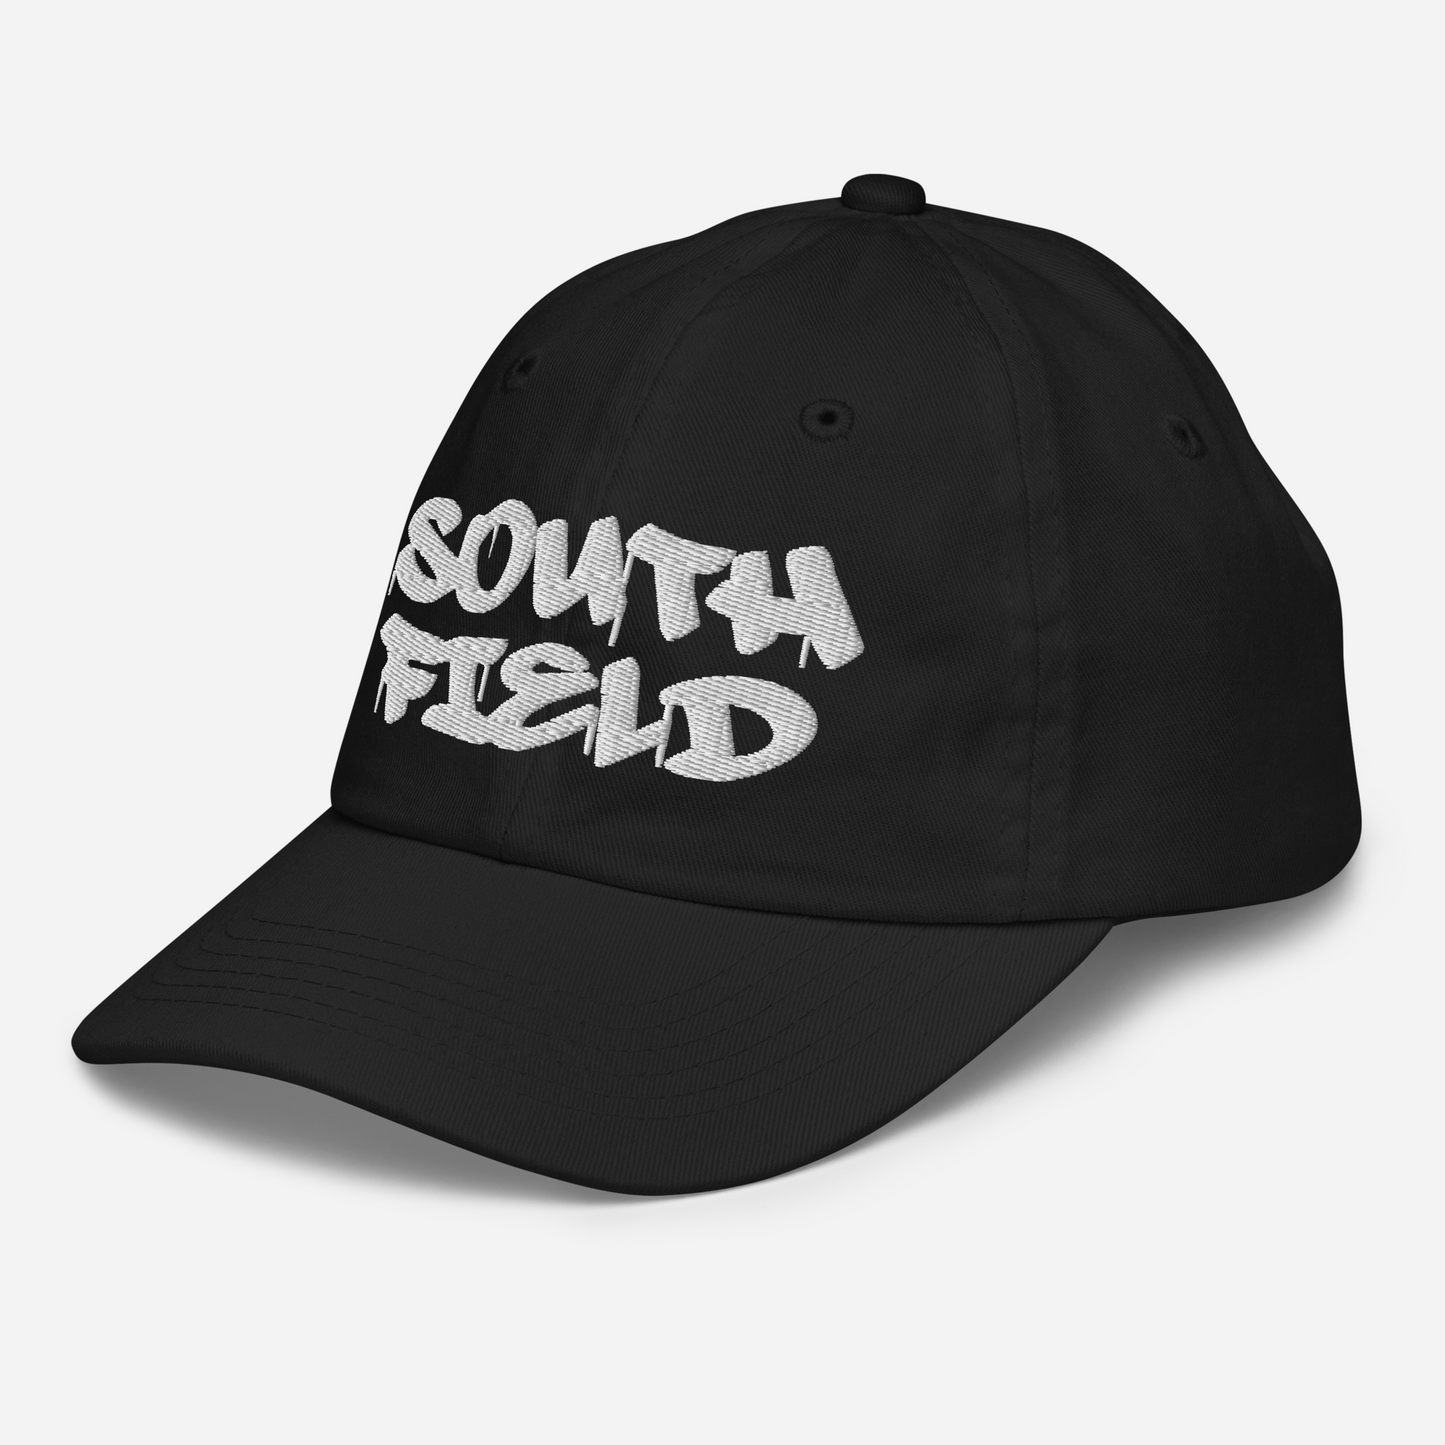 'Southfield' Youth Baseball Cap | White/Black Embroidery